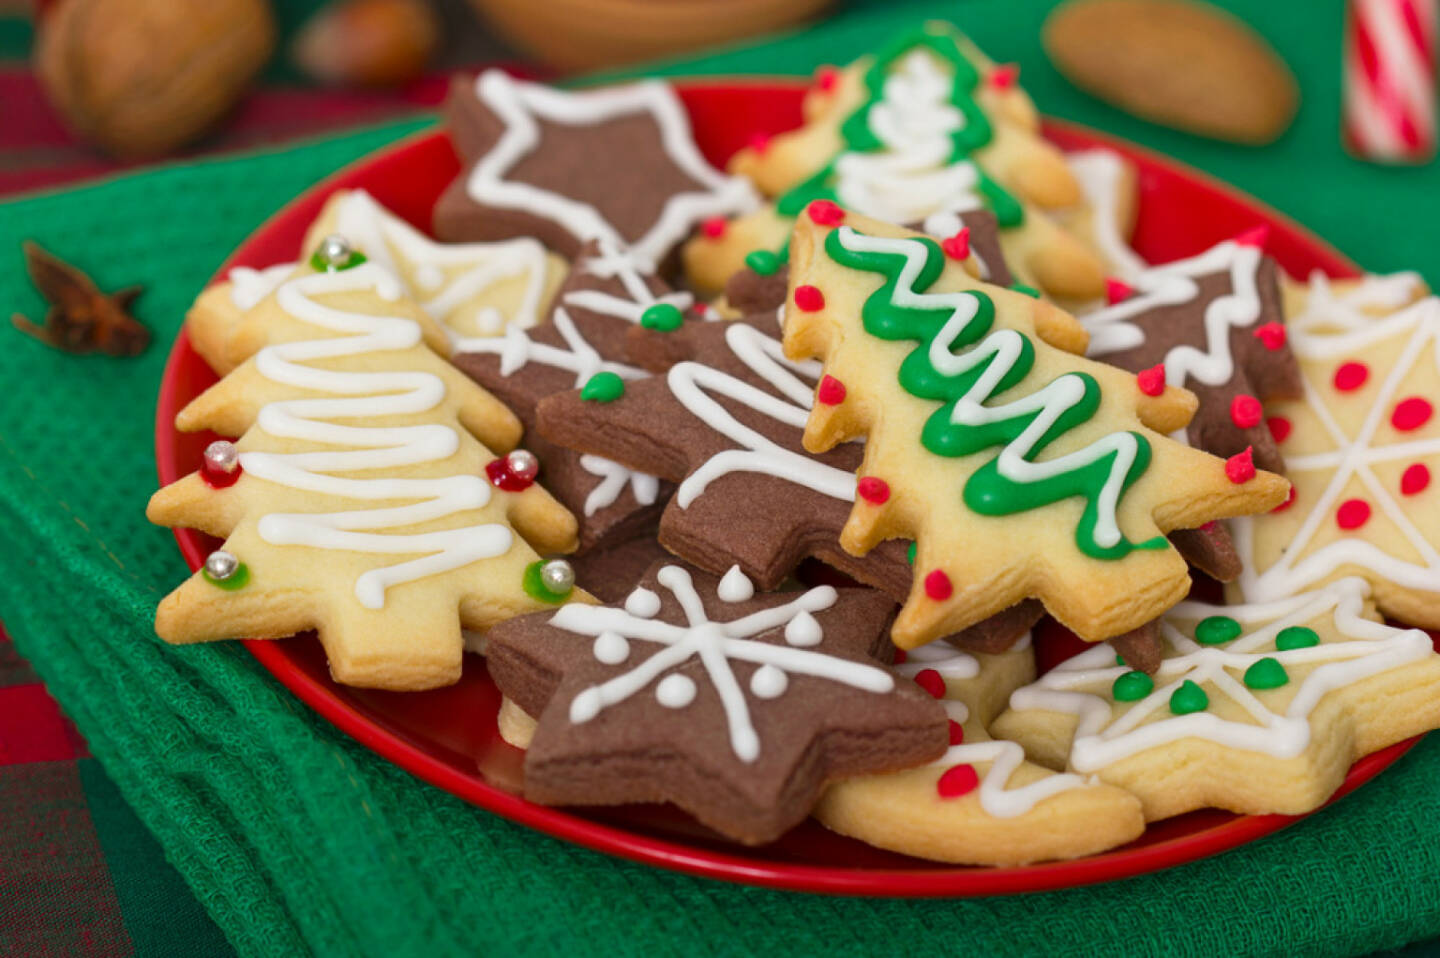 Weihnachten, Kekse, Weihnachtskekse, backen, http://www.shutterstock.com/de/pic-157172630/stock-photo-christmas-cookies.html